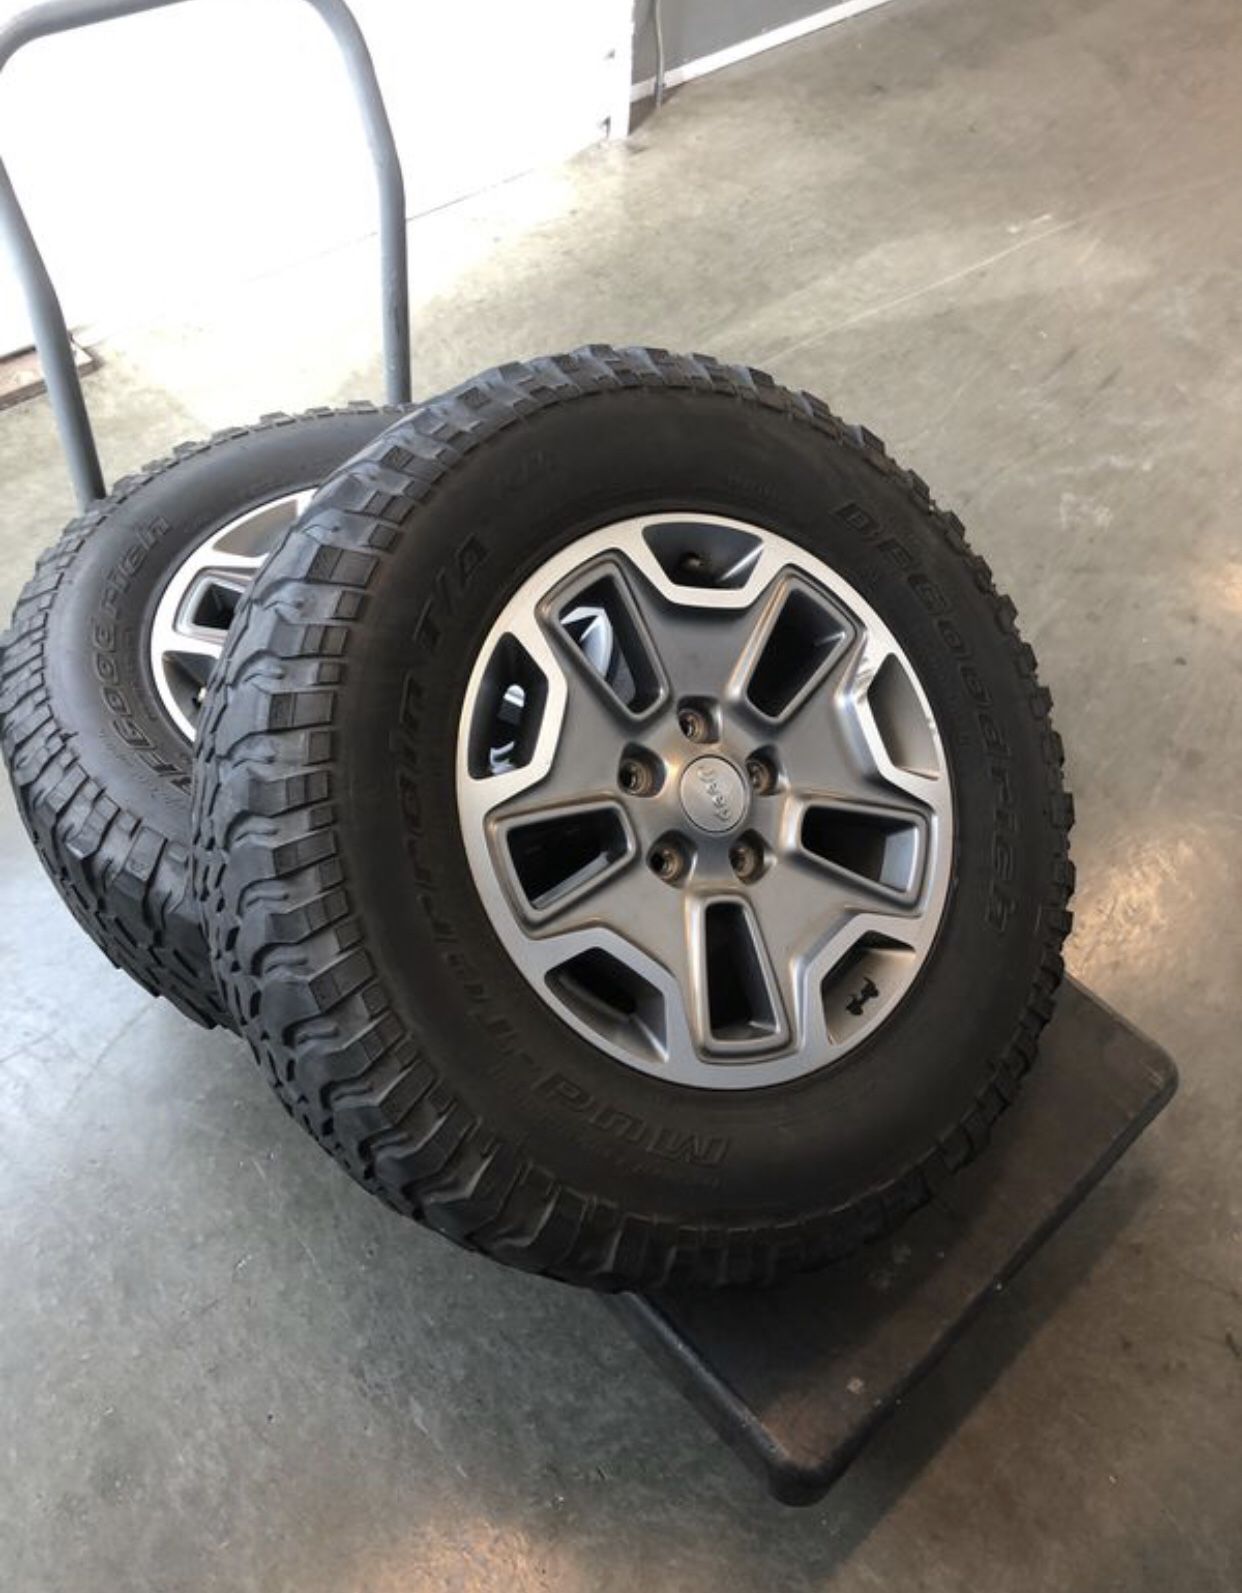 Jeep rubicon 2018 rims/wheels bfgoodrich mud terain tires